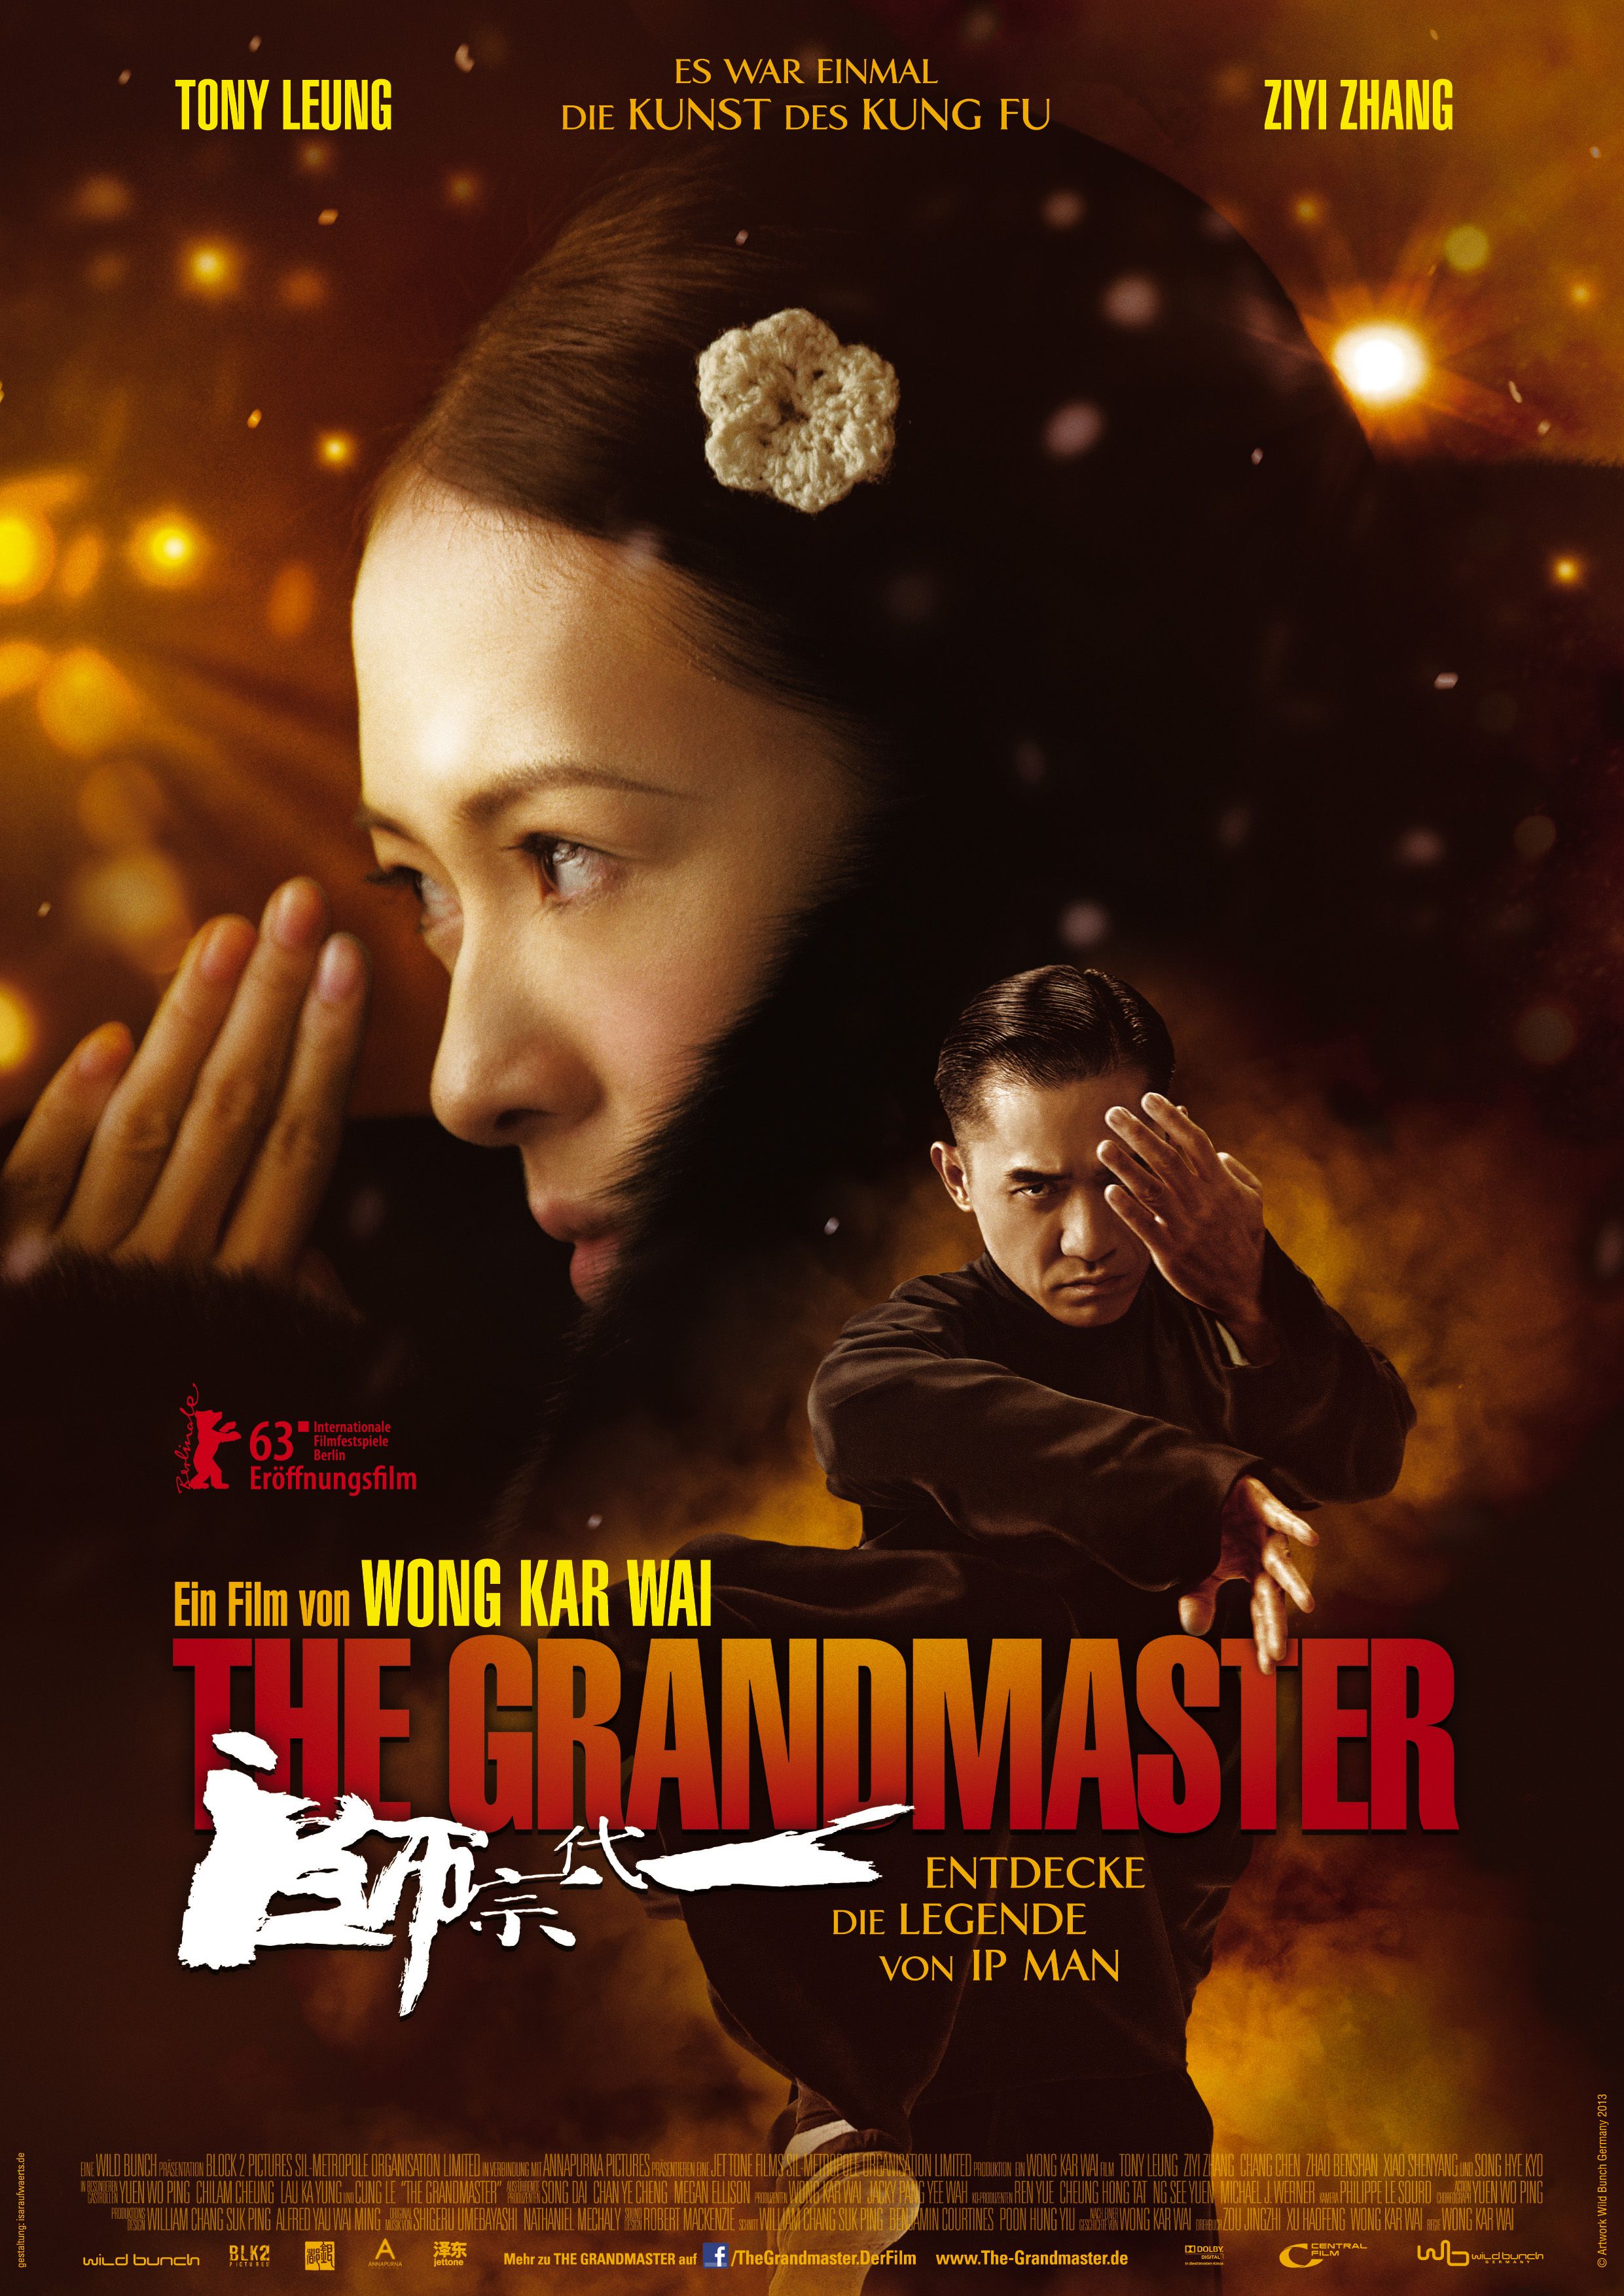 The Grandmaster (2013) Hindi Dubbed Full Movie